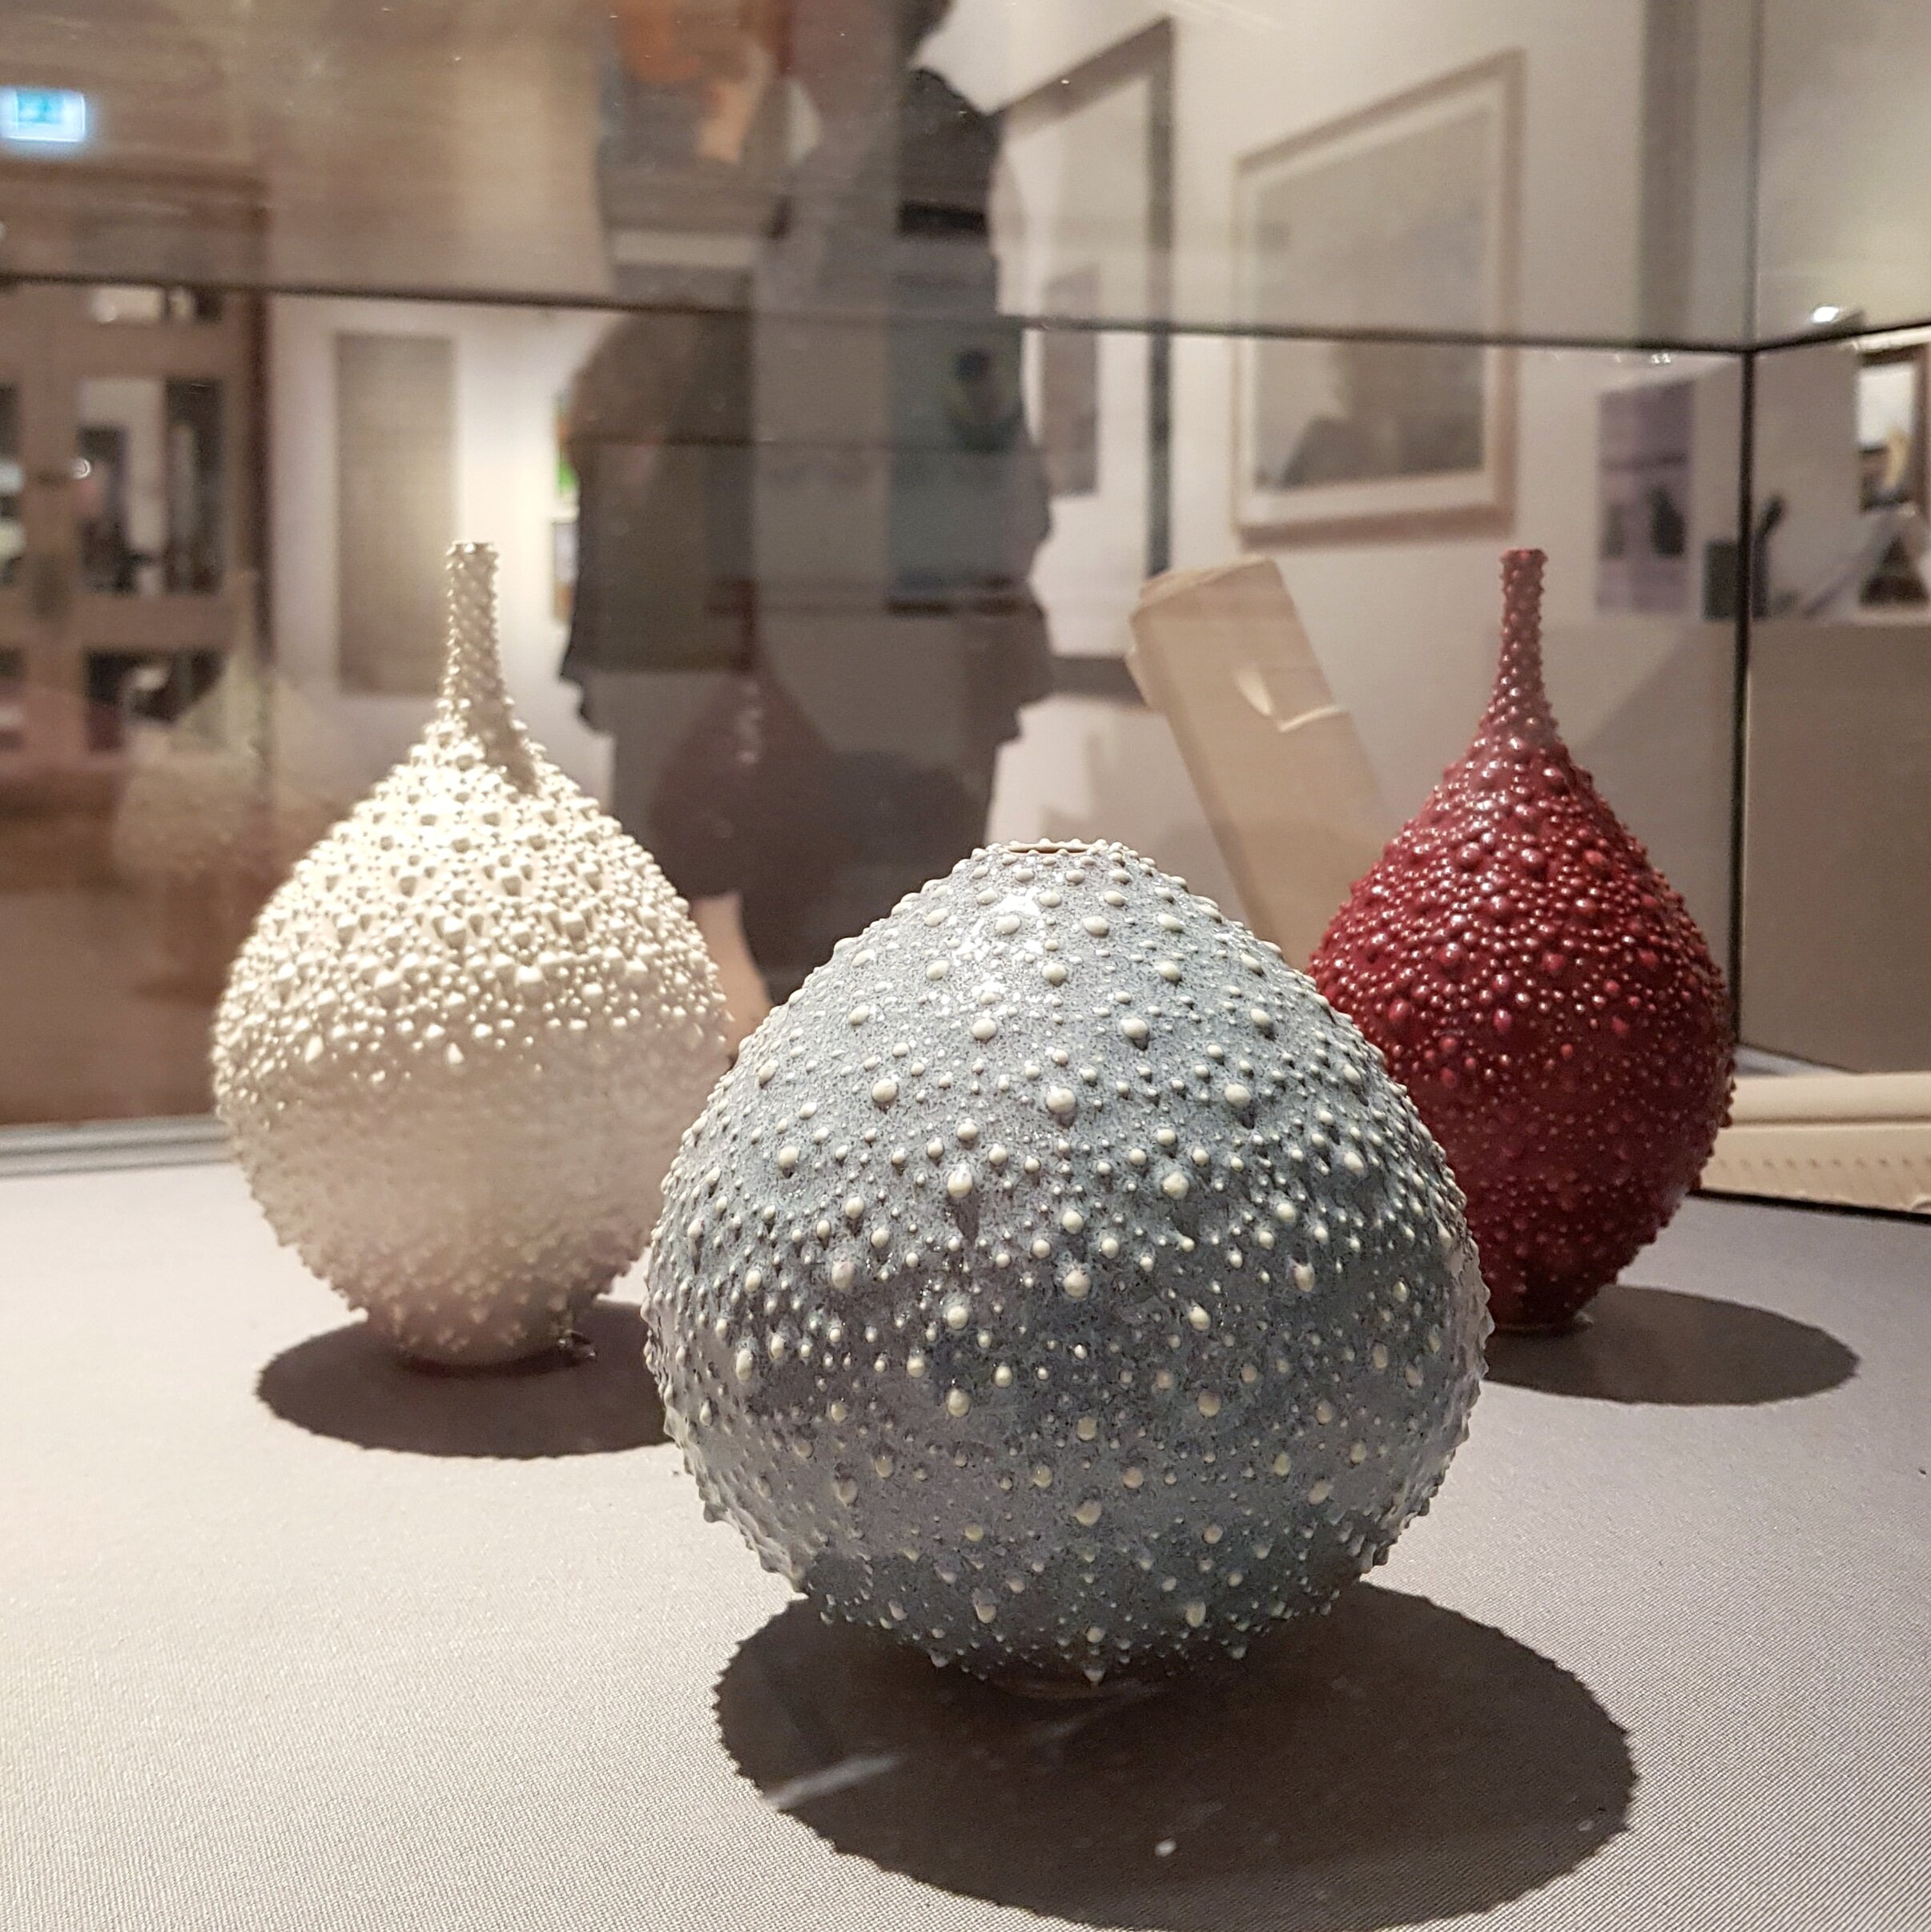 Hannah Billingham at Ferens Art Gallery Open Exhibition 2020 ceramic artist beverley